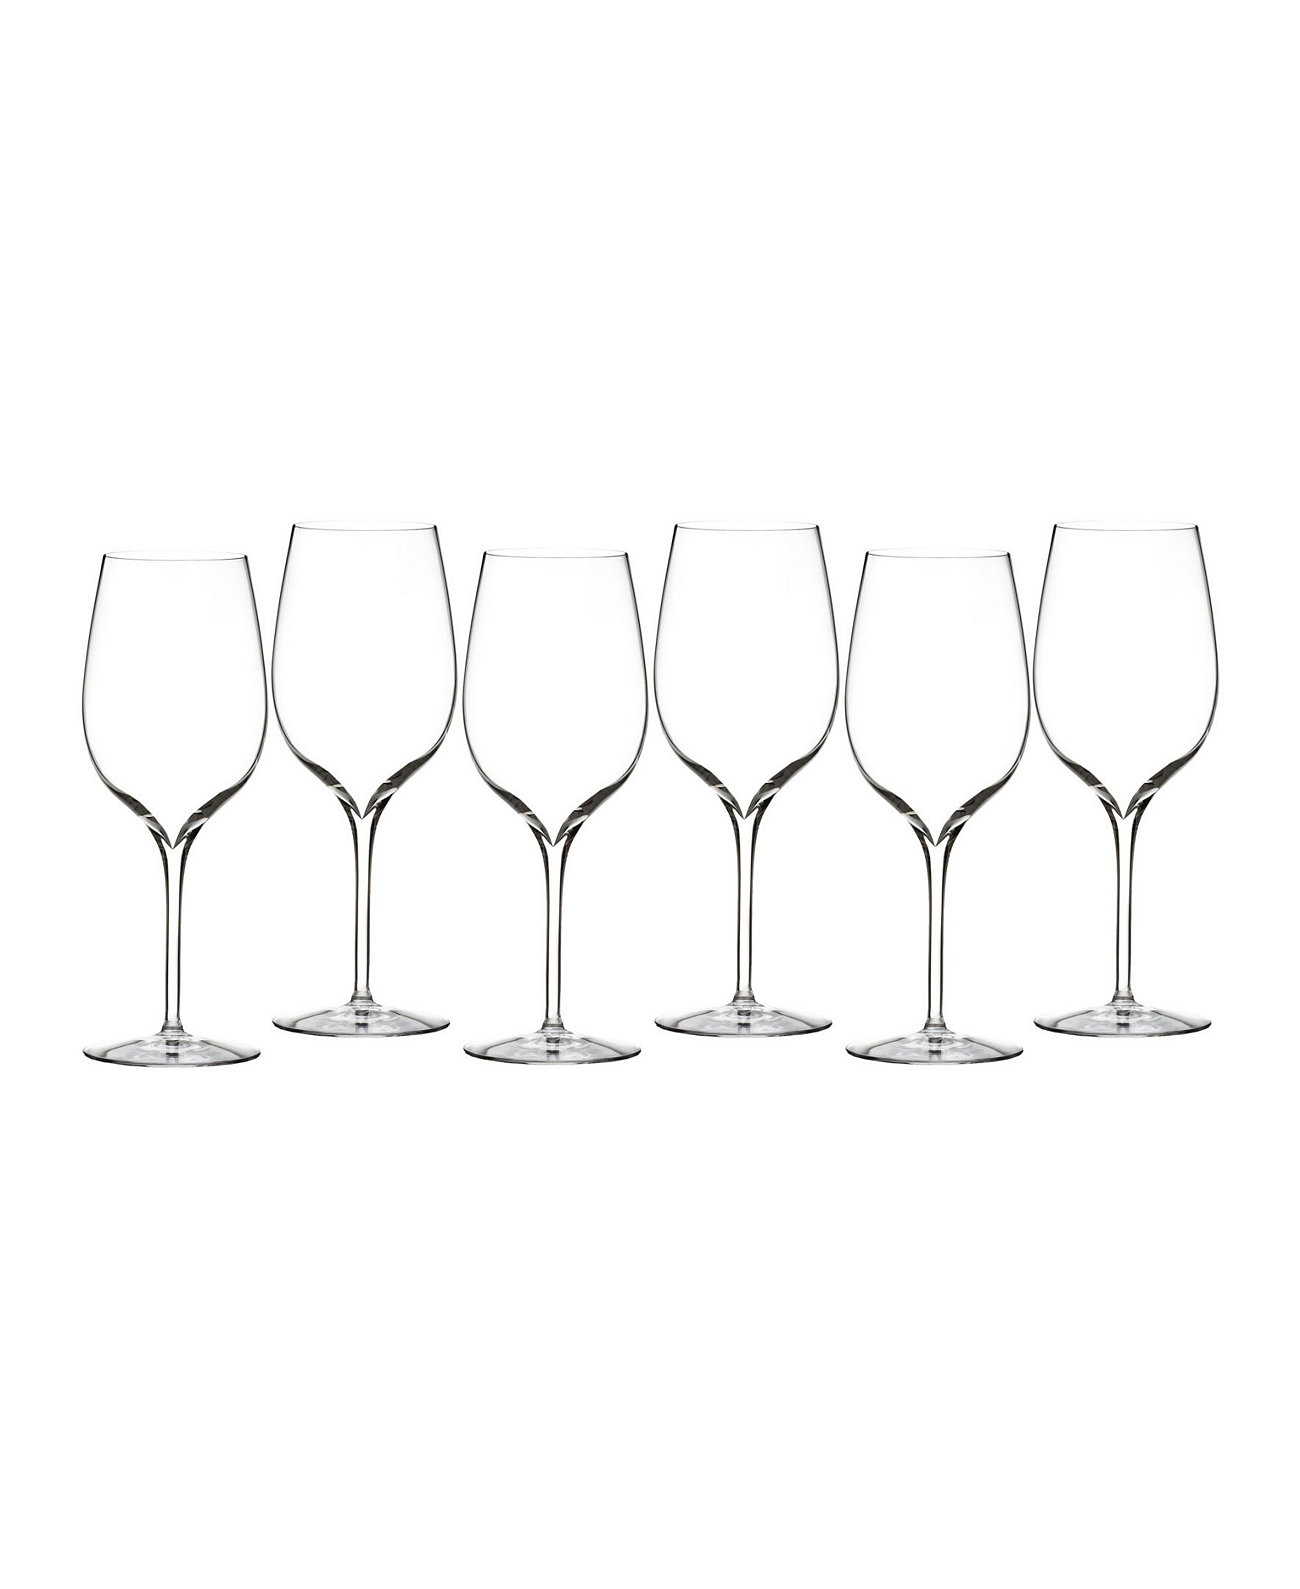 Бокалы для дегустации вина Elegance 15 унций, набор из 6 Waterford